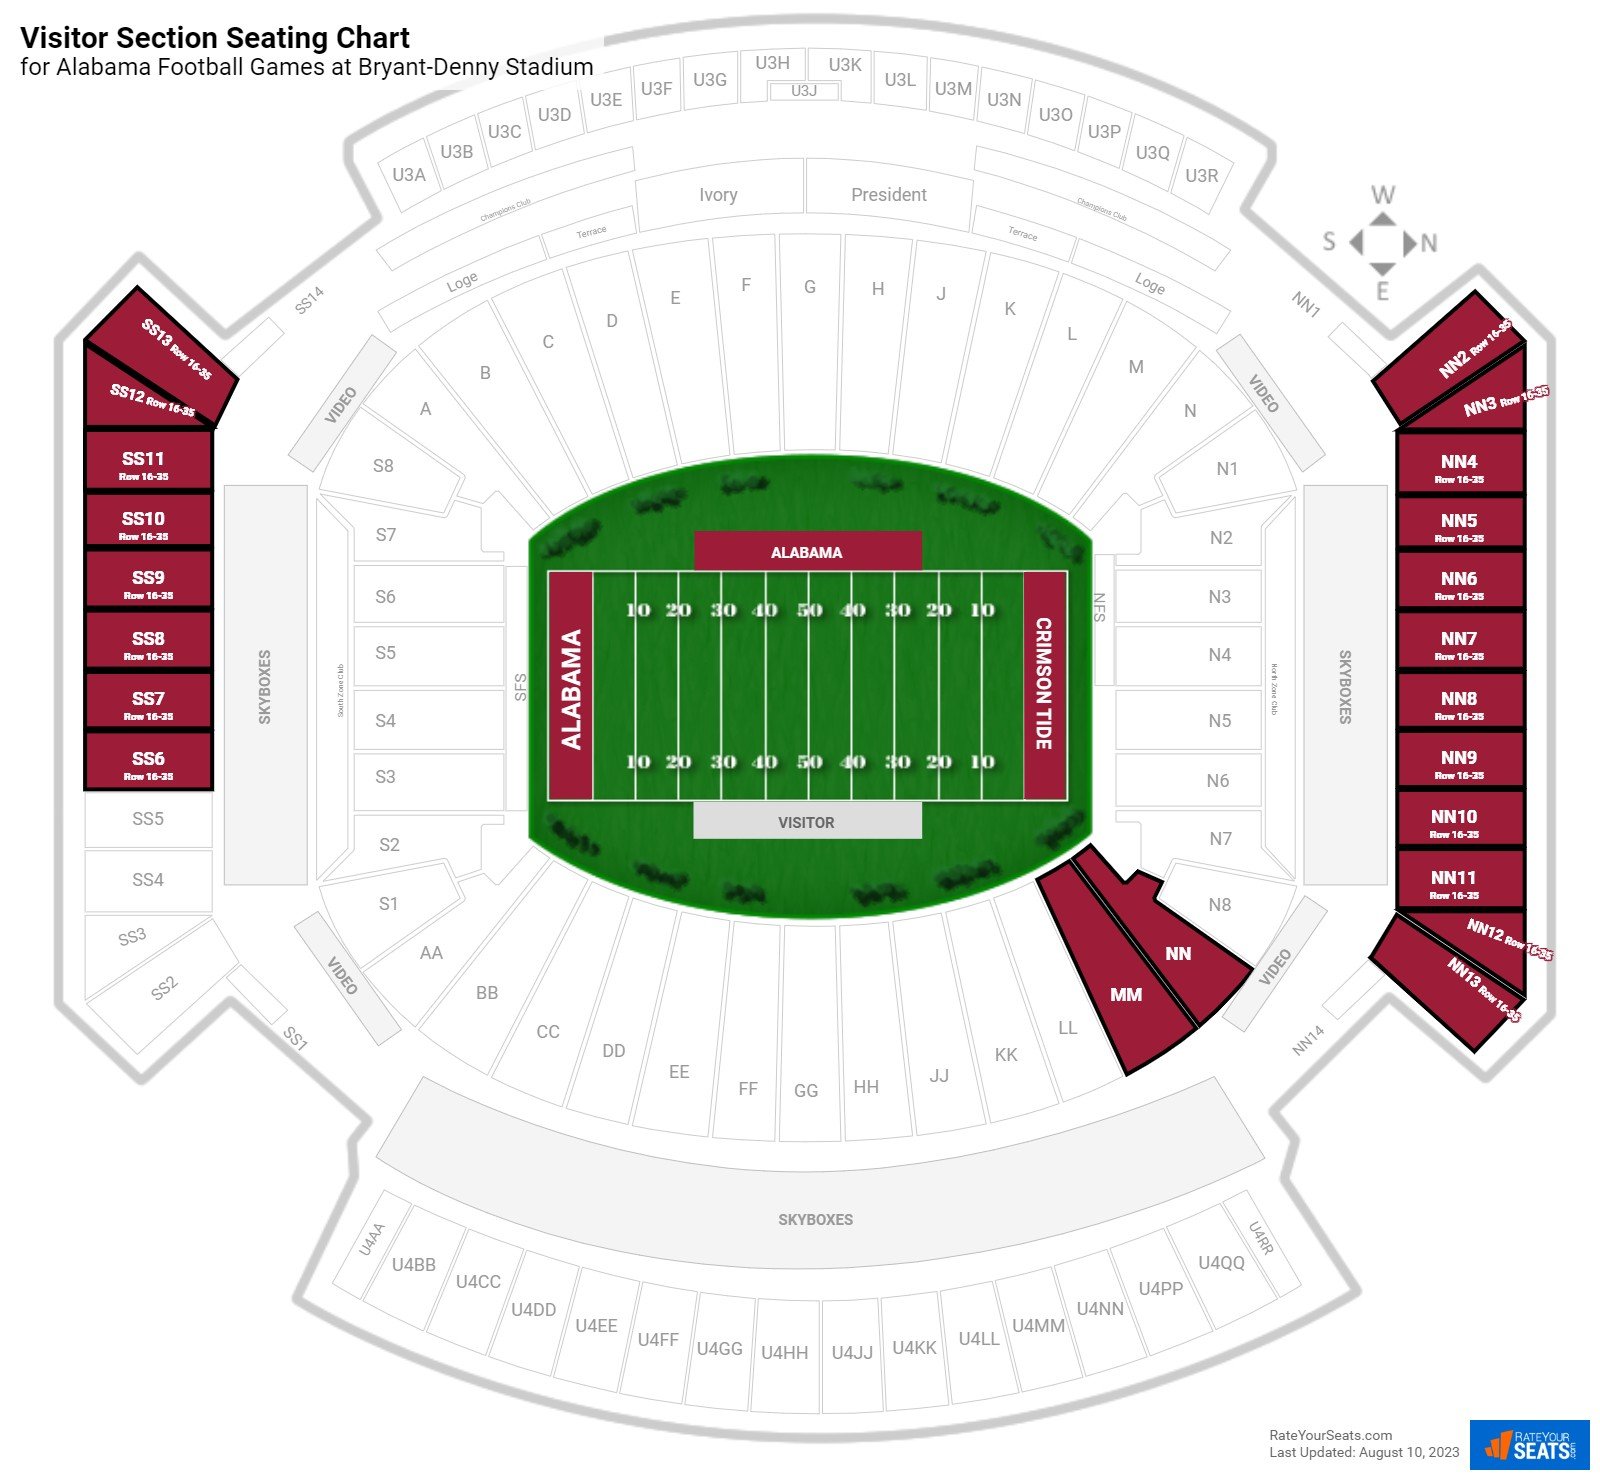 Alabama Visitor Section Seating Chart at Bryant-Denny Stadium